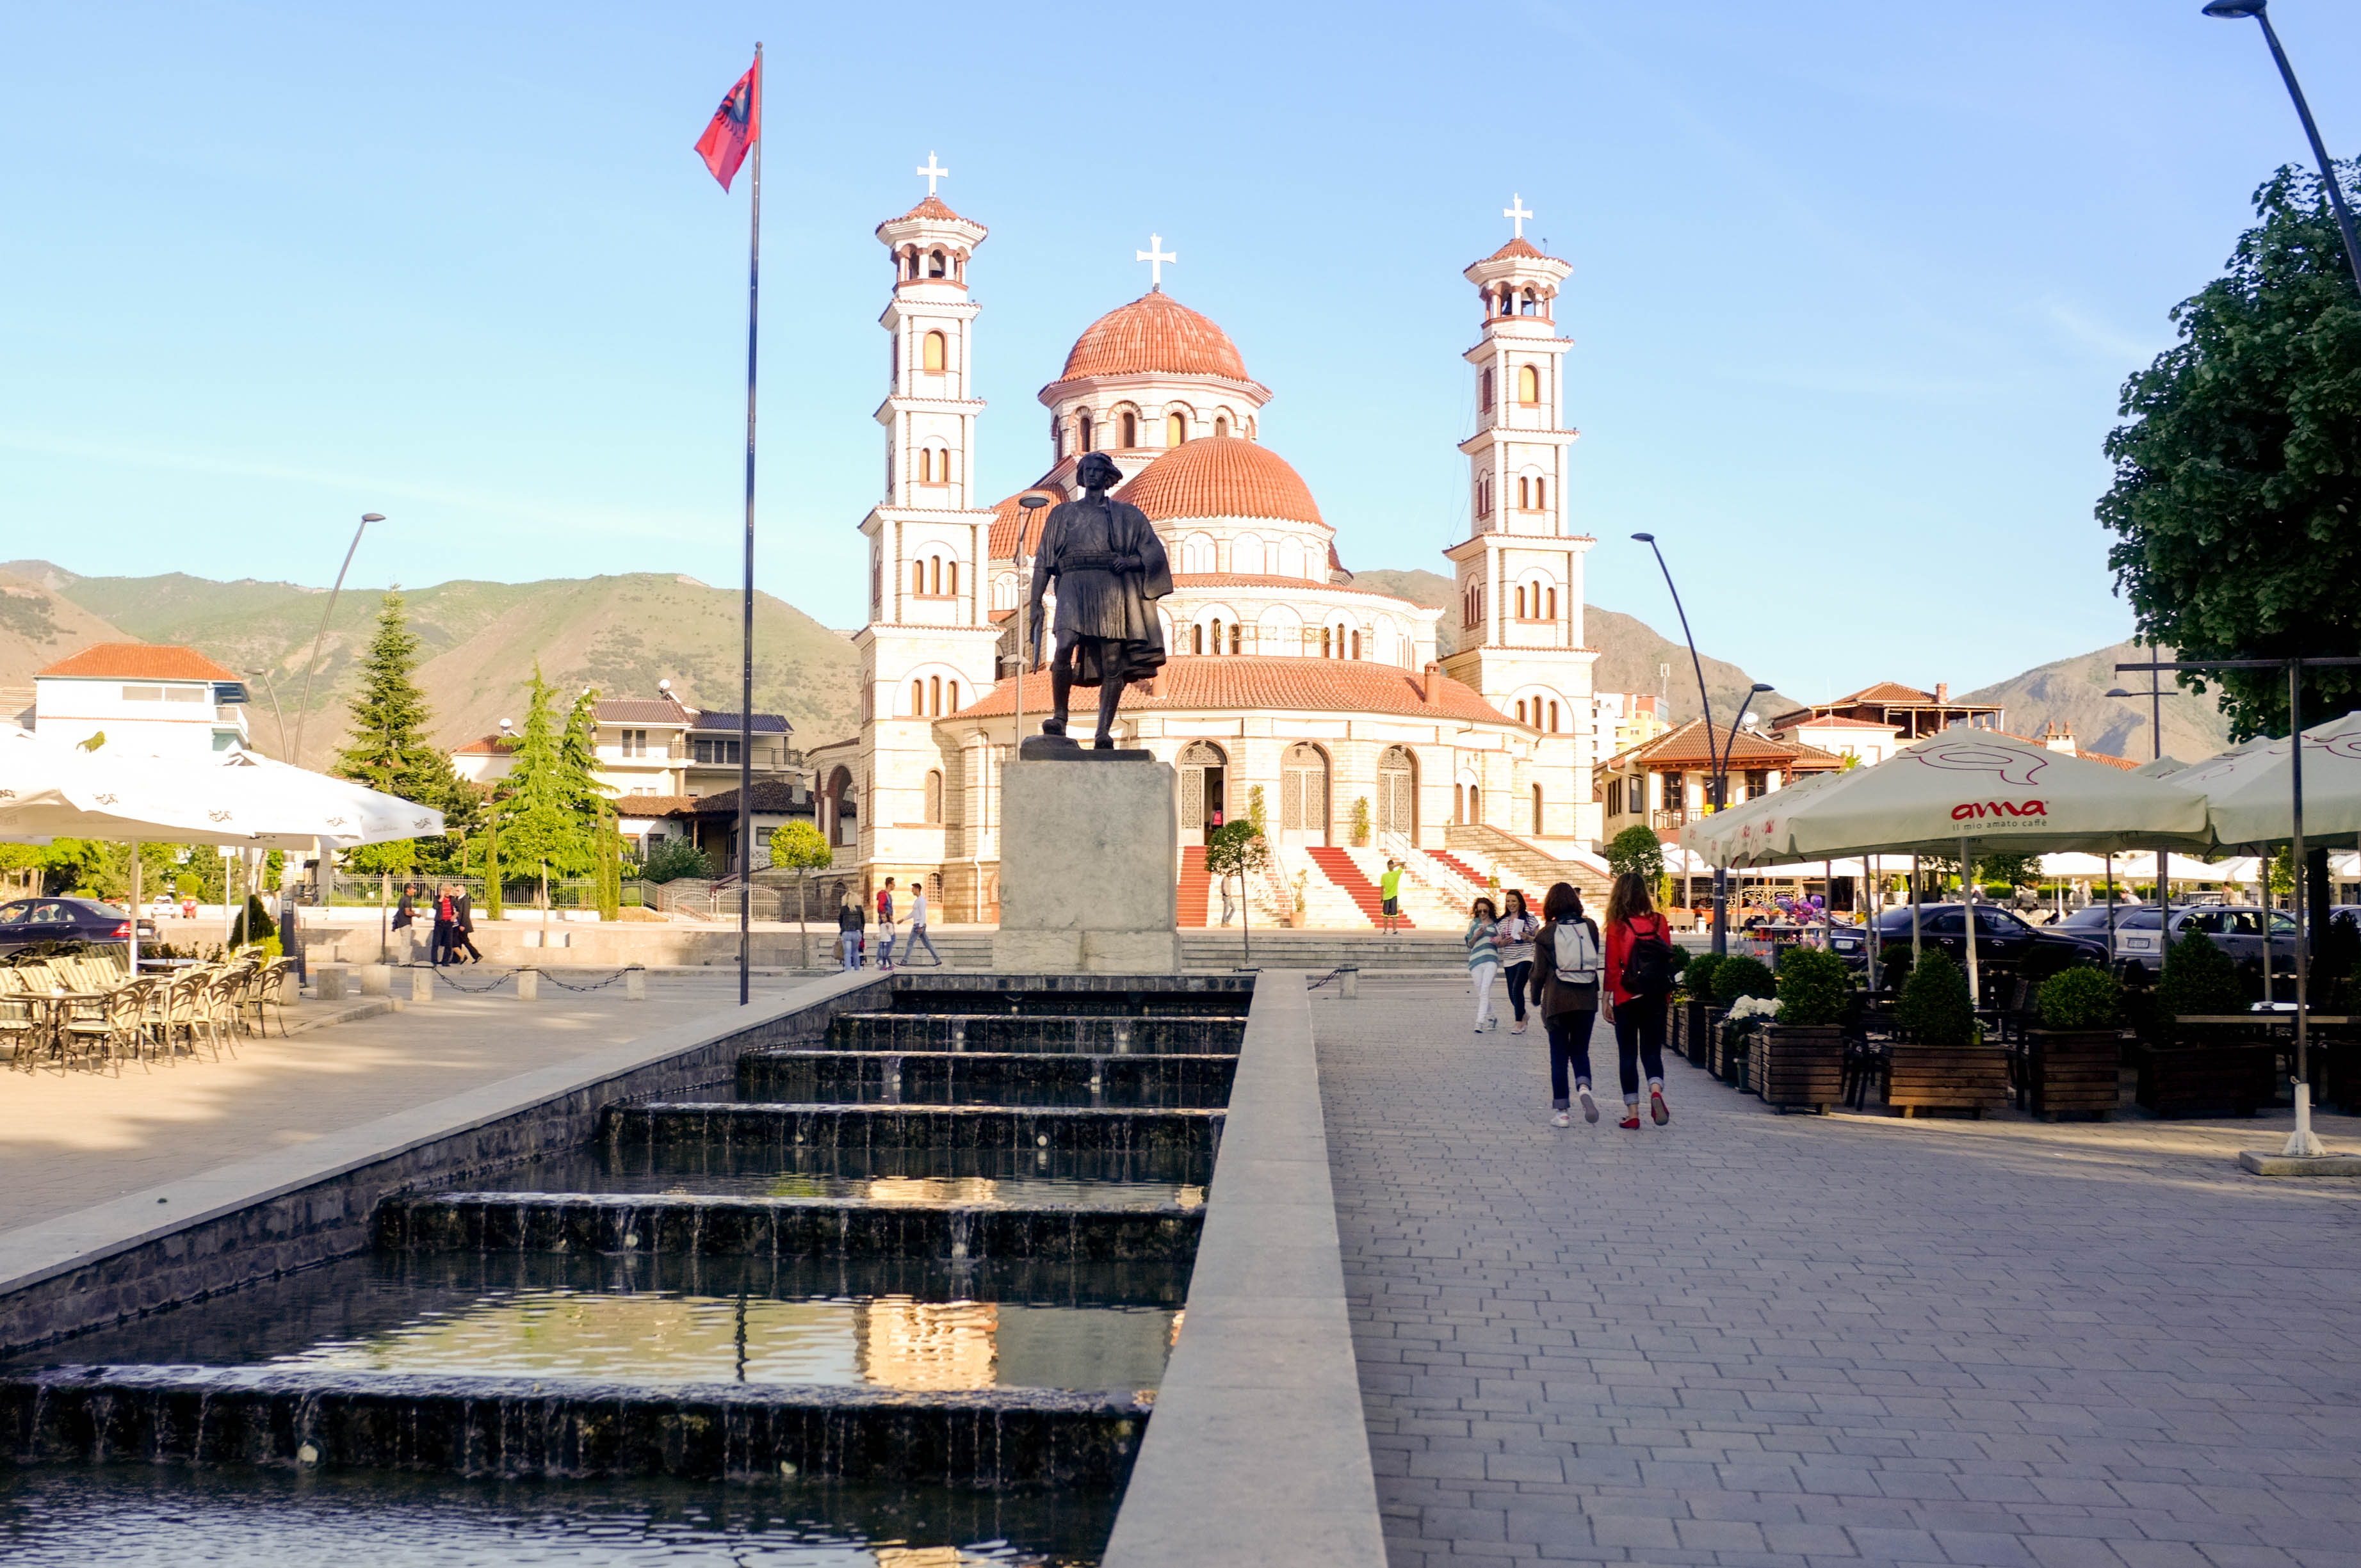 Albania Korca - Albania - #AlbaniaTourism #travel #FrizeMedia #DigitalMarketing